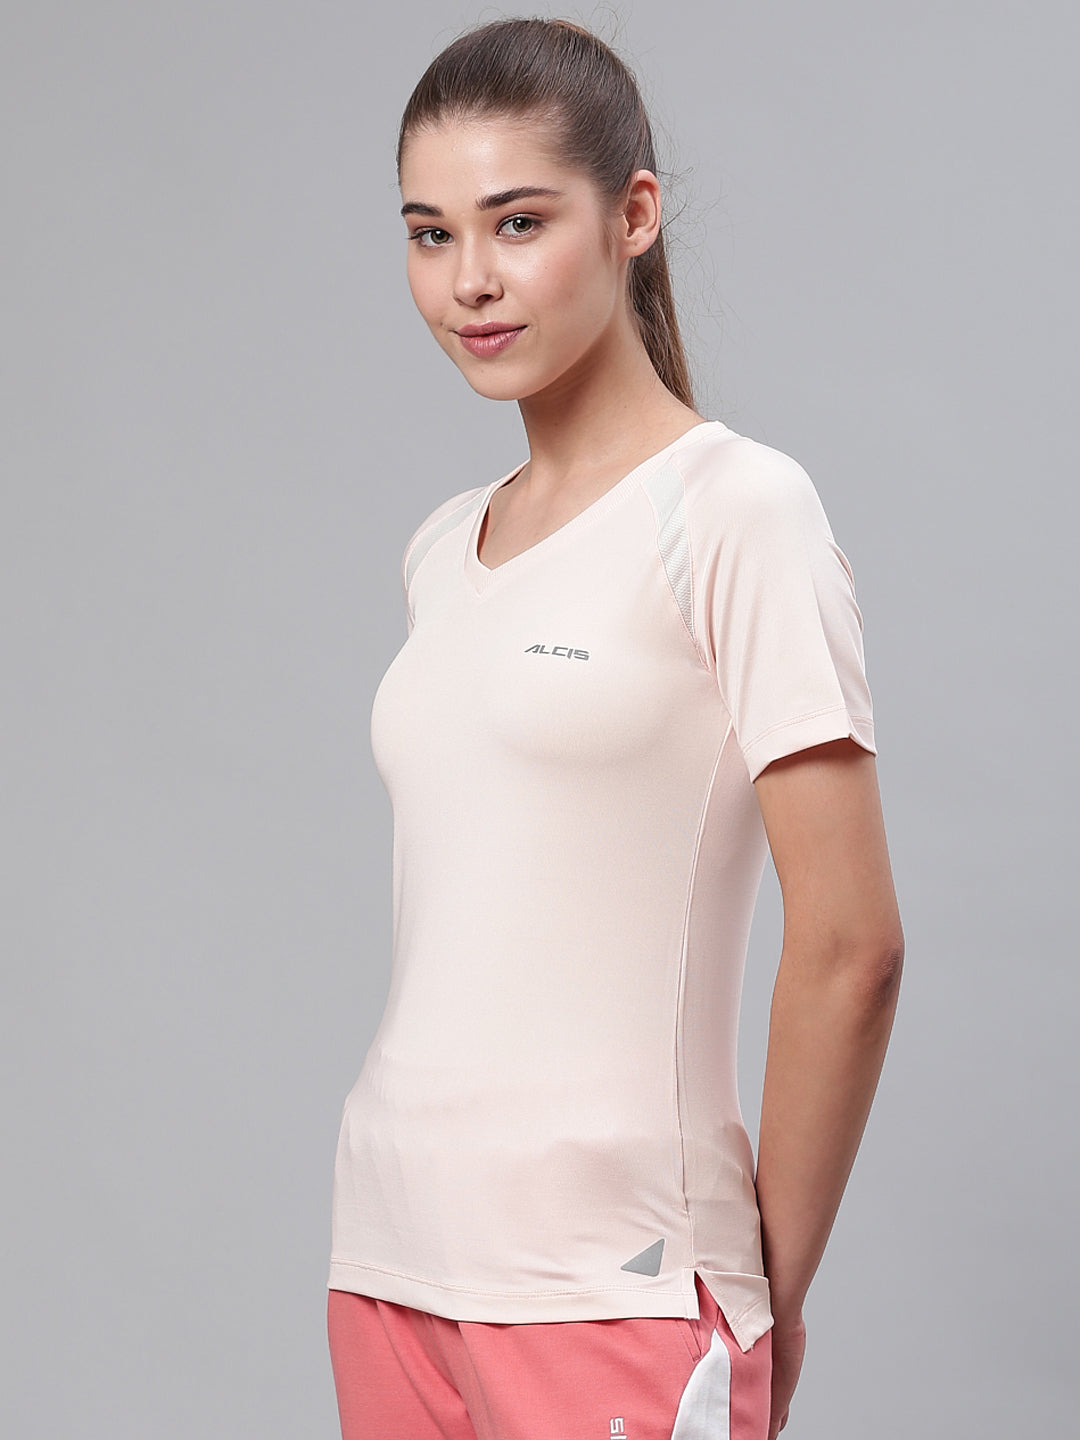 Alcis Women Peach-Coloured Solid Round Neck Training T-shirt